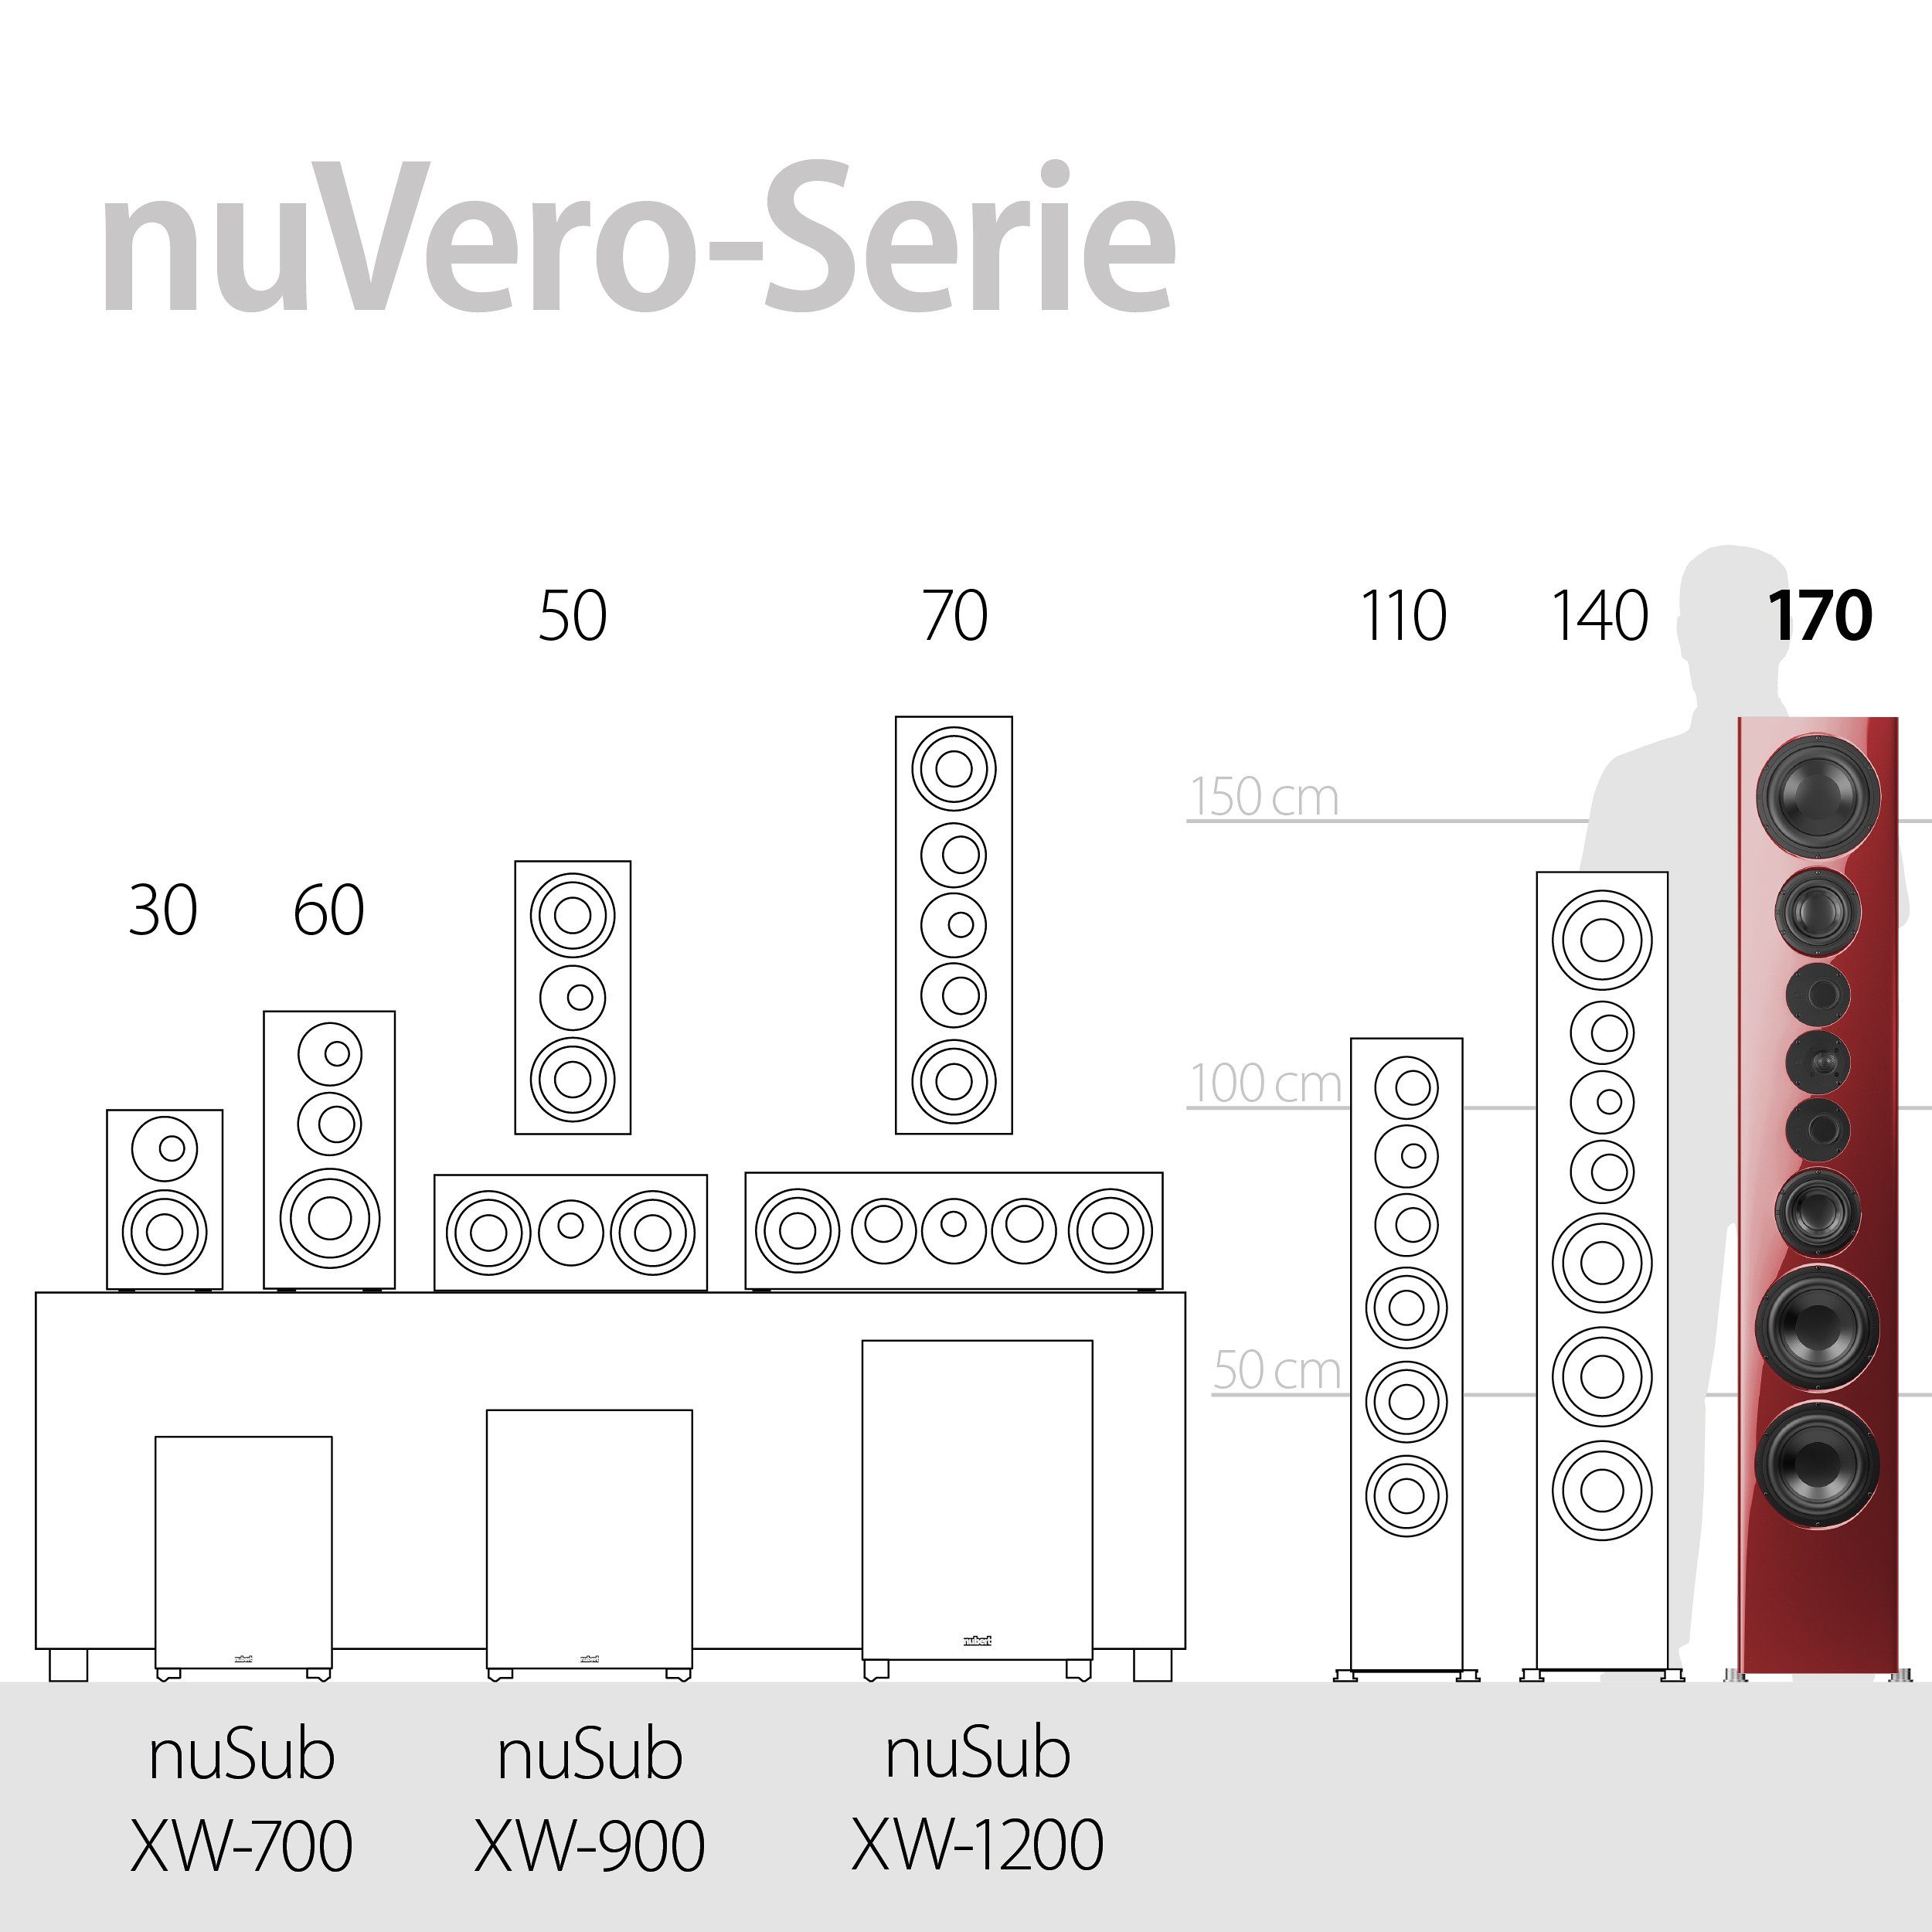 Stand-Lautsprecher W) 170 Nubert nuVero Diamantschwarz (650